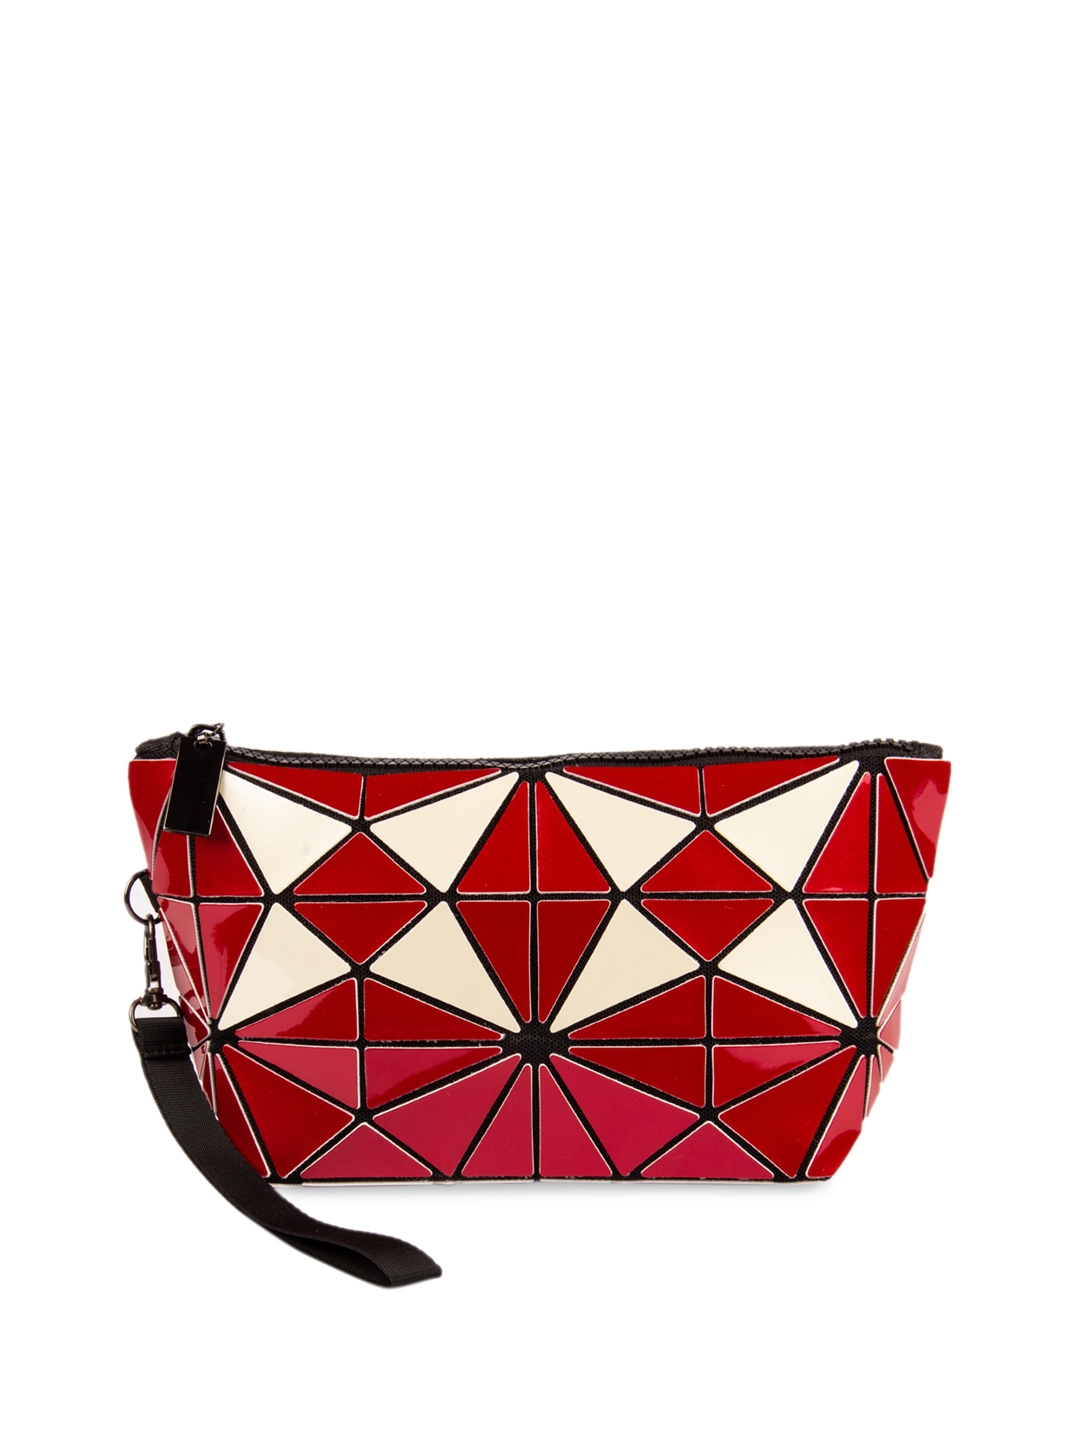 BAOMI Geometric Cosmetic Pouch Range Assorted Color Soft Handbag